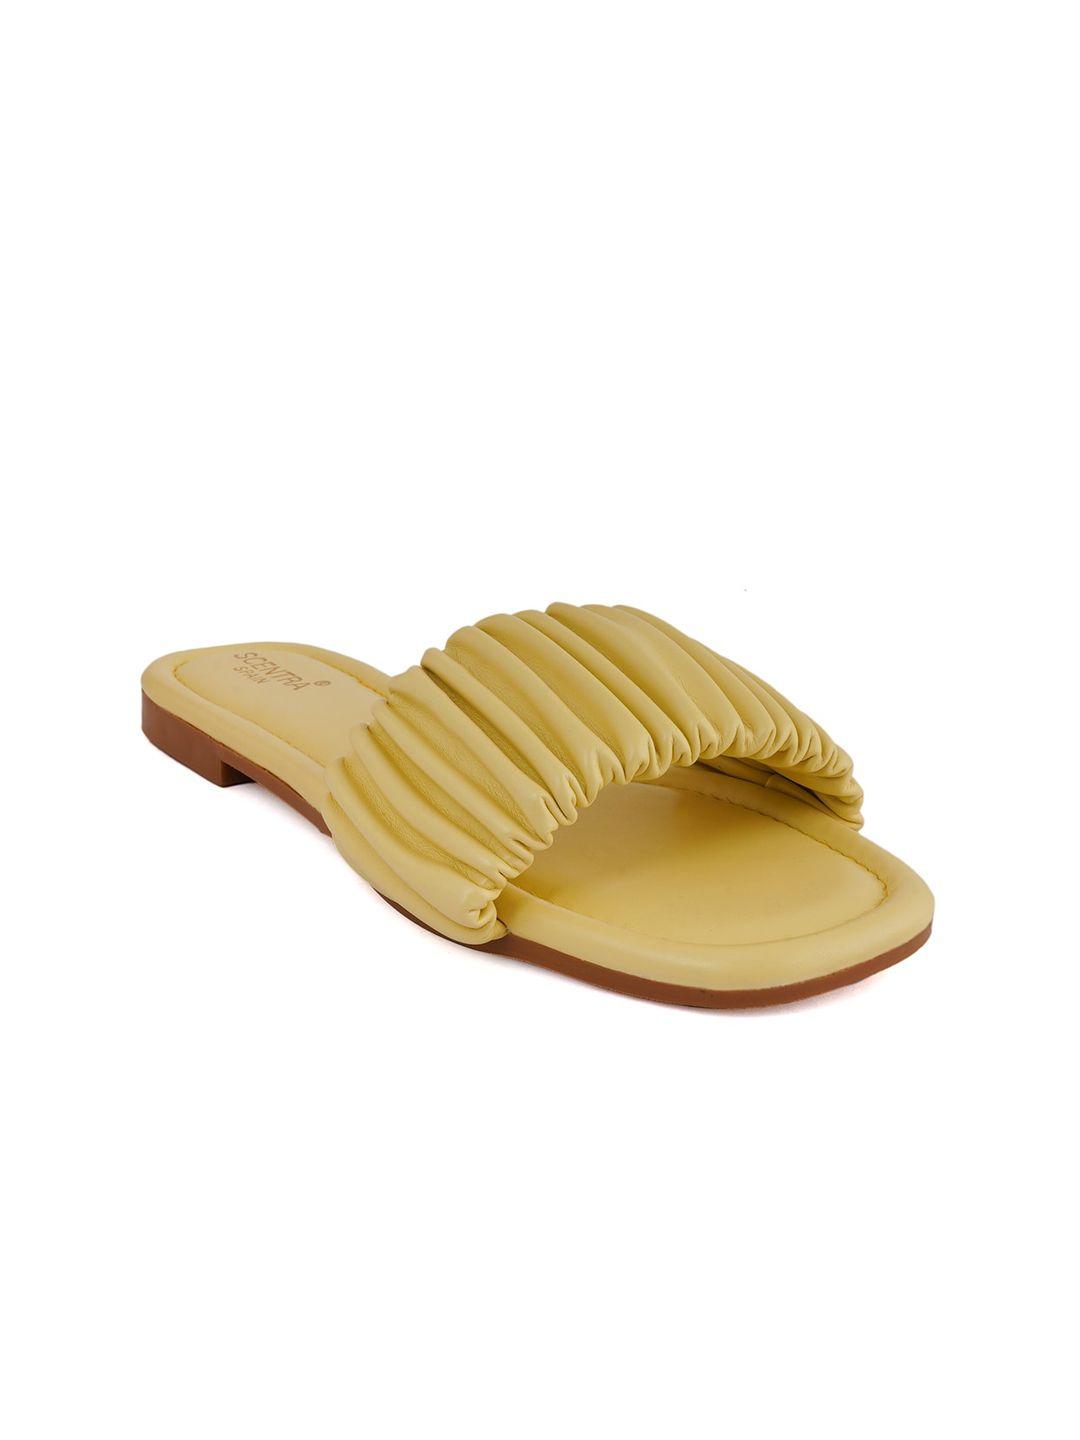 scentra women yellow open toe flats